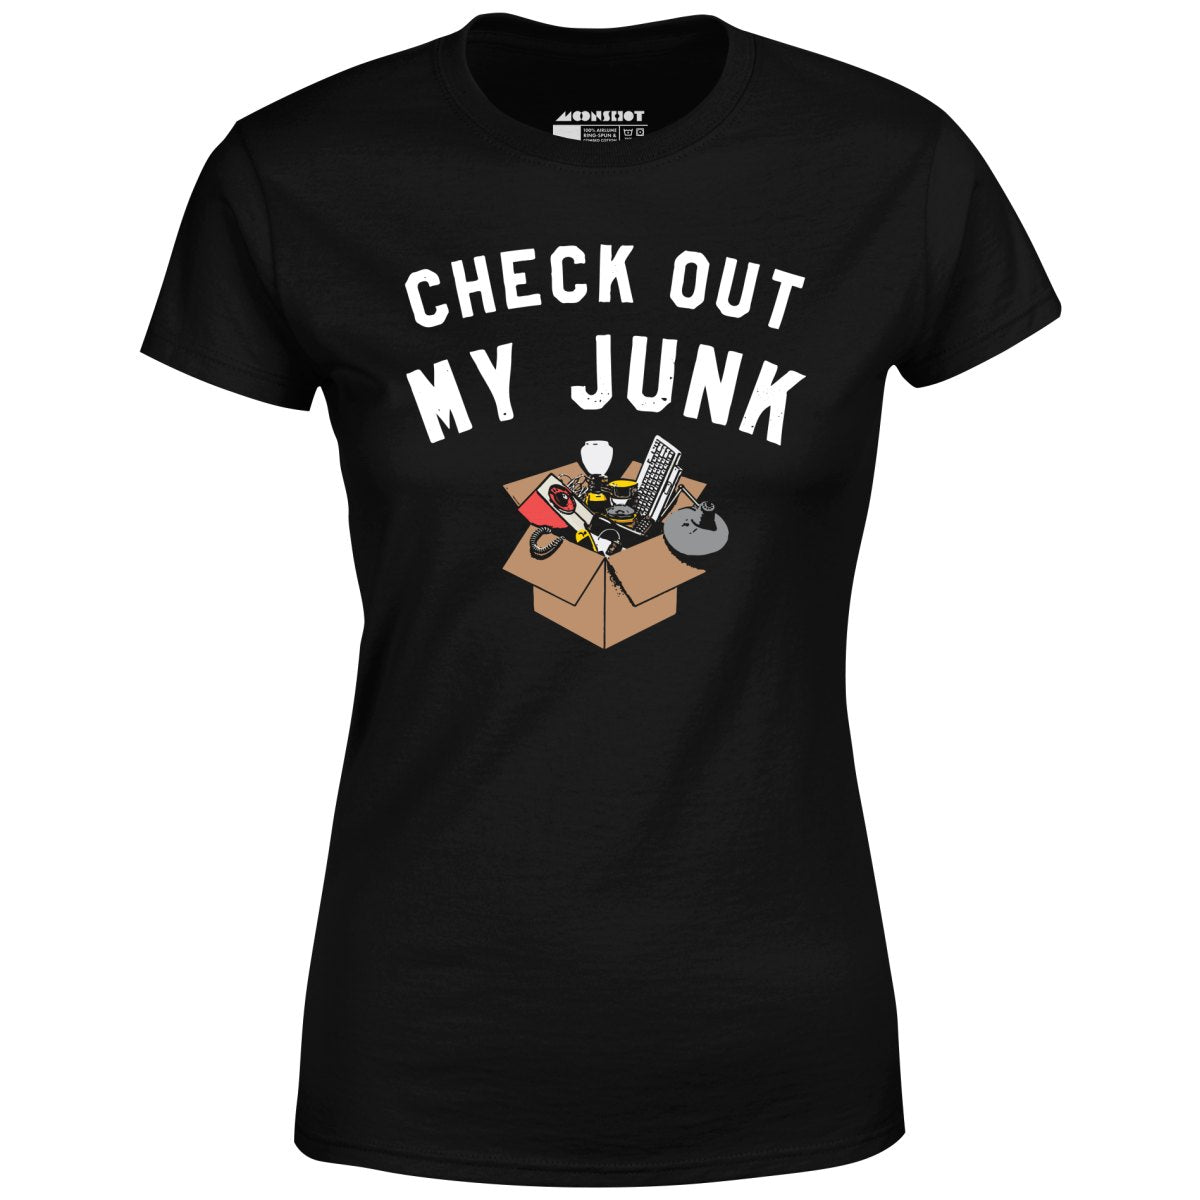 Check Out My Junk - Women's T-Shirt